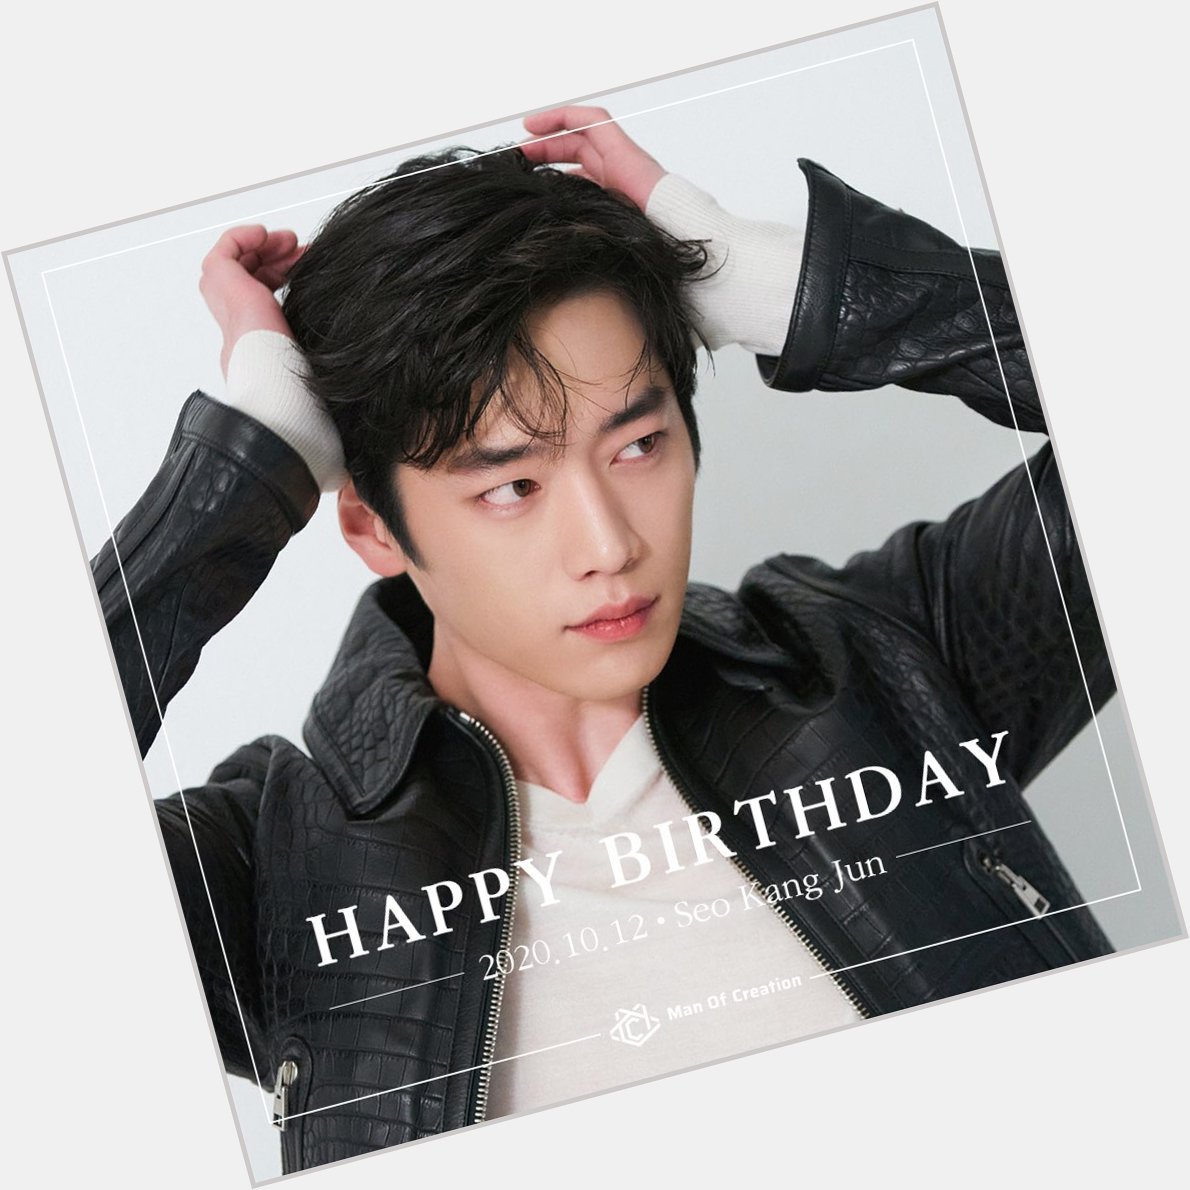 Happy birthday, Seo Kang Joon 